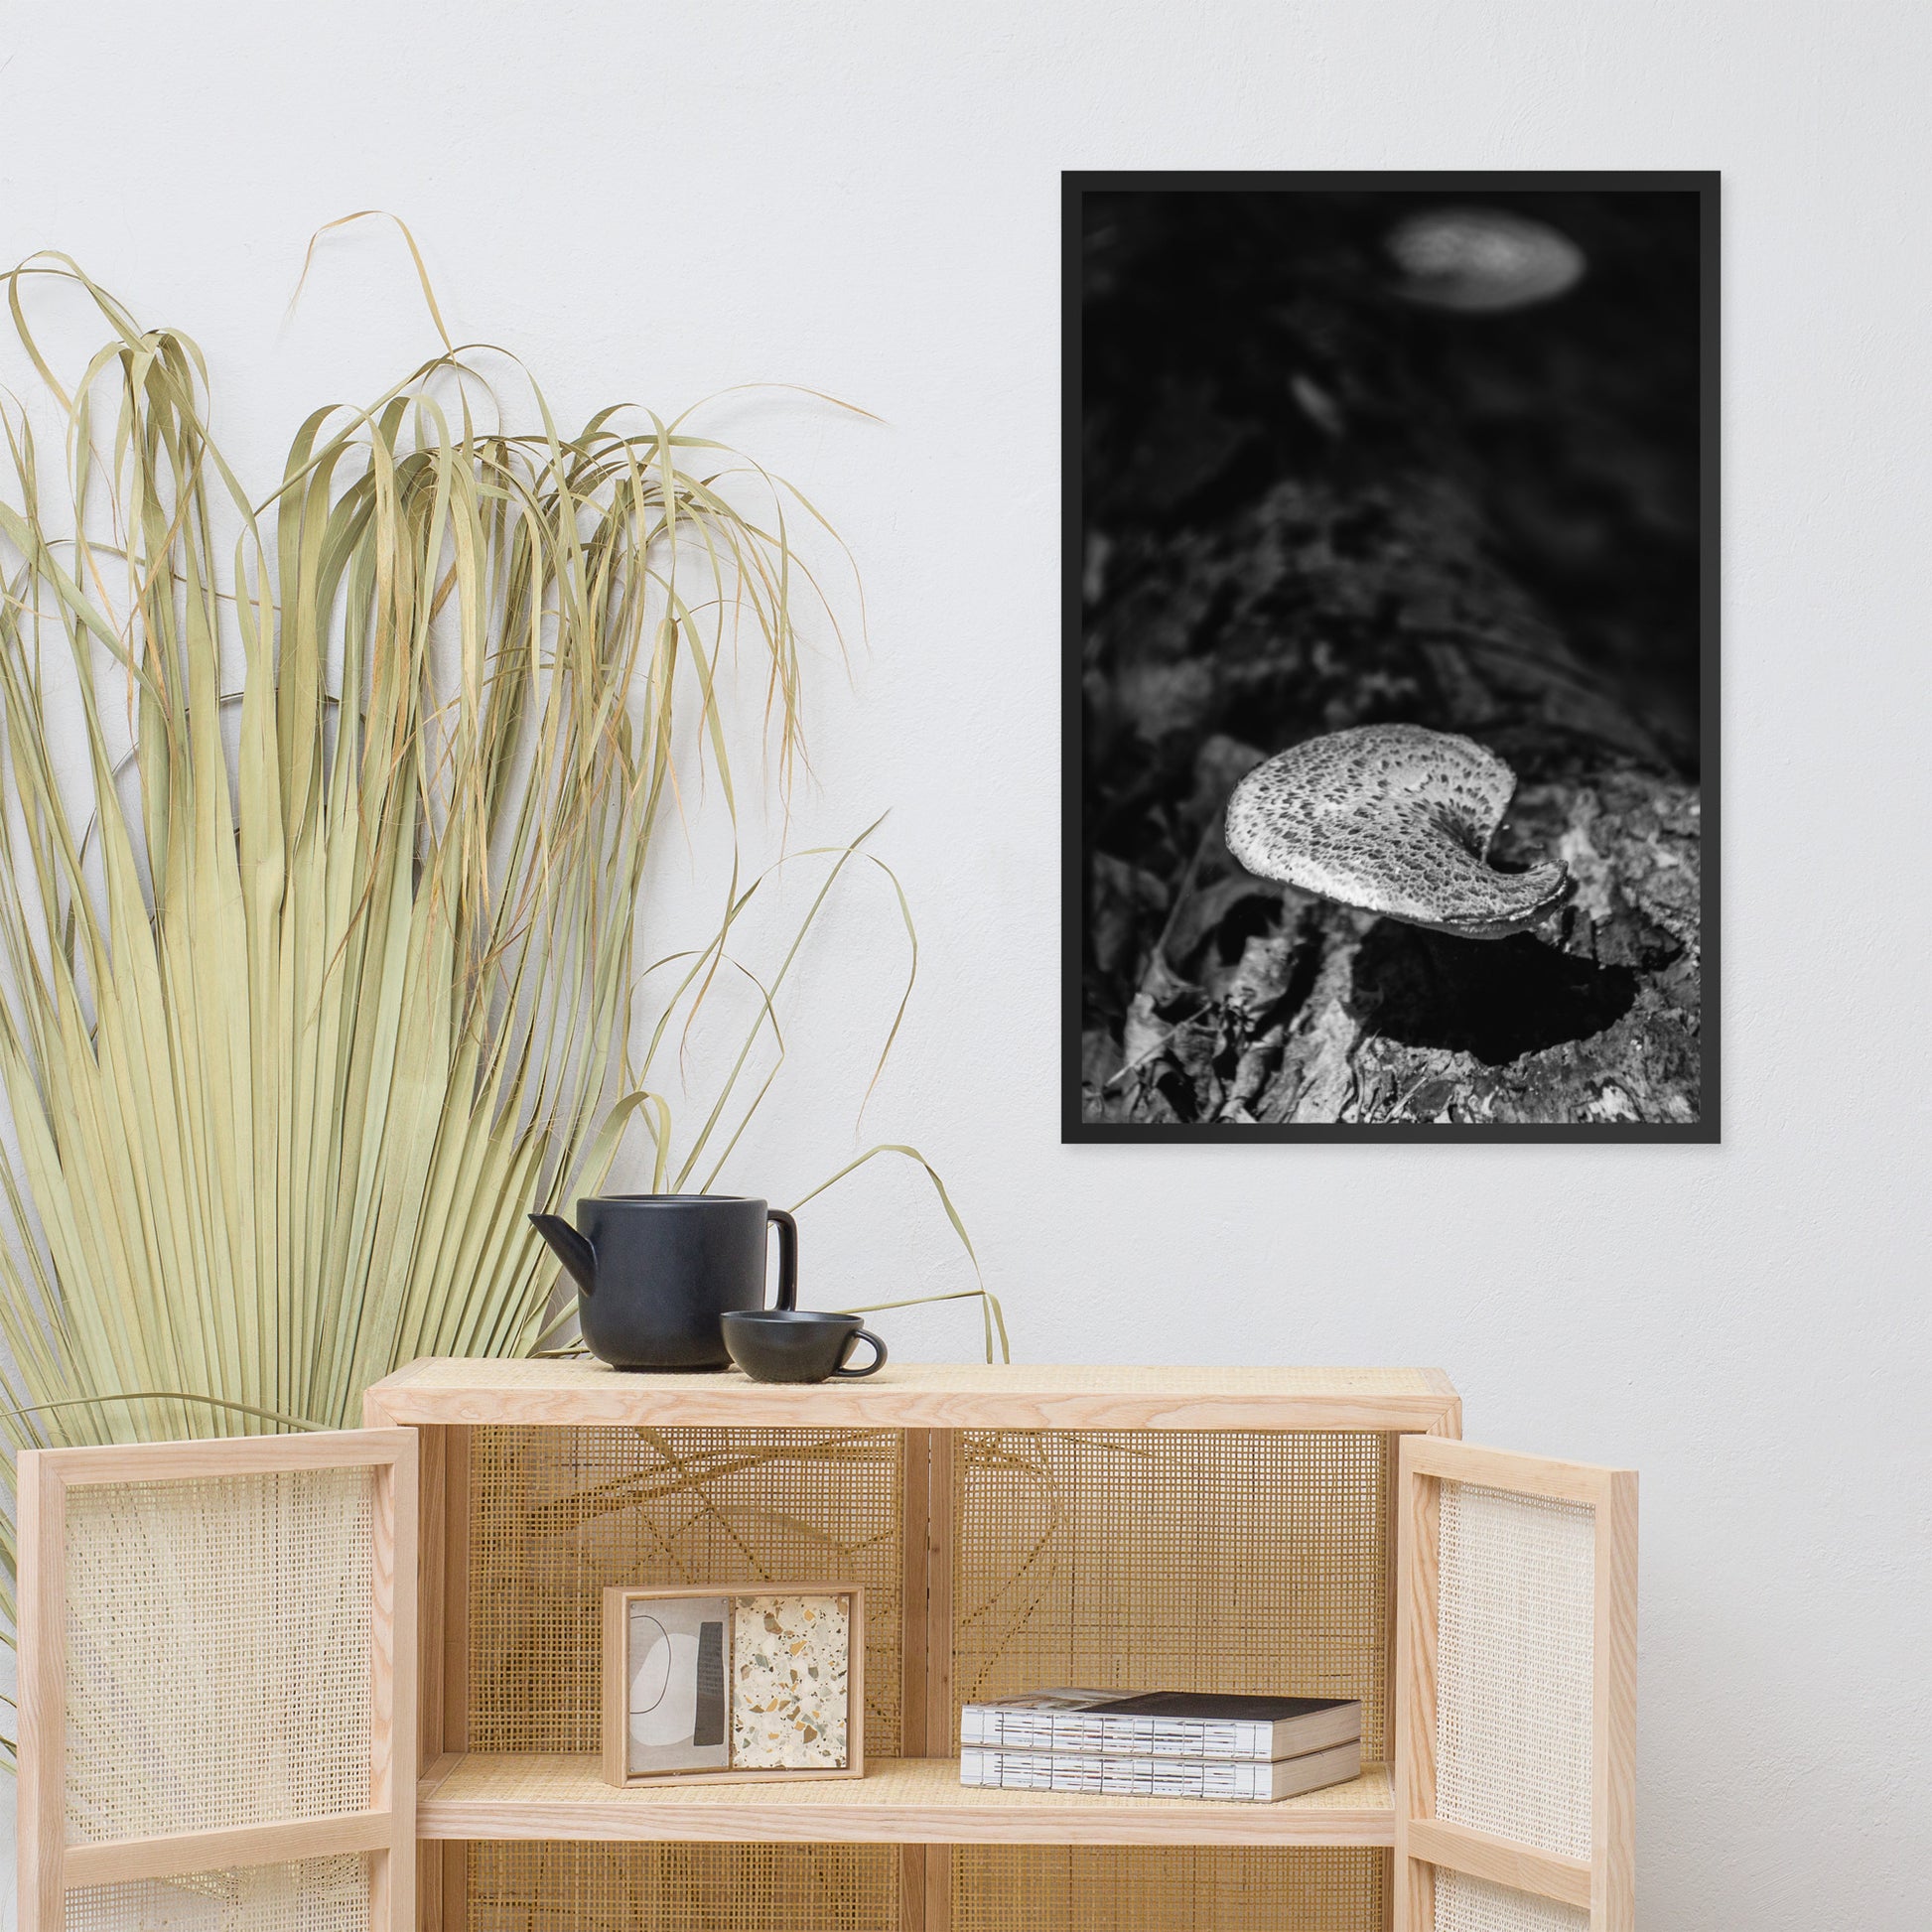 Rustic Farmhouse Wall Decor: Mushroom on Log in Black and White Botanical Nature Photo Framed Wall Art Print